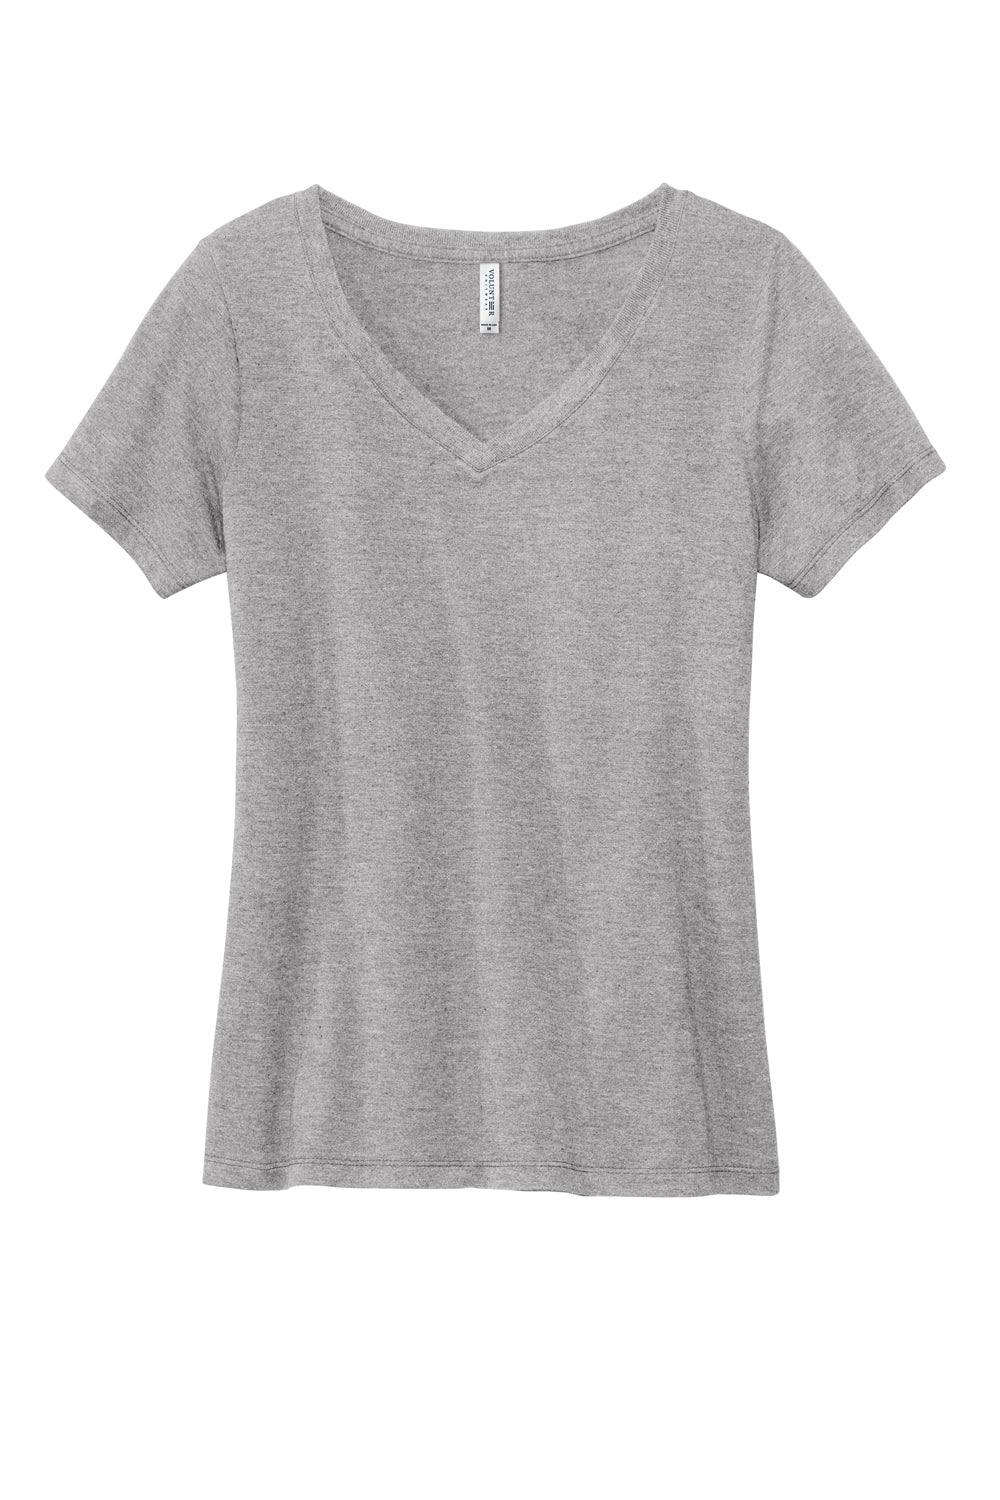 Volunteer Knitwear LVL45V USA Made Daily Short Sleeve V-Neck T-Shirt Heather Grey Flat Front